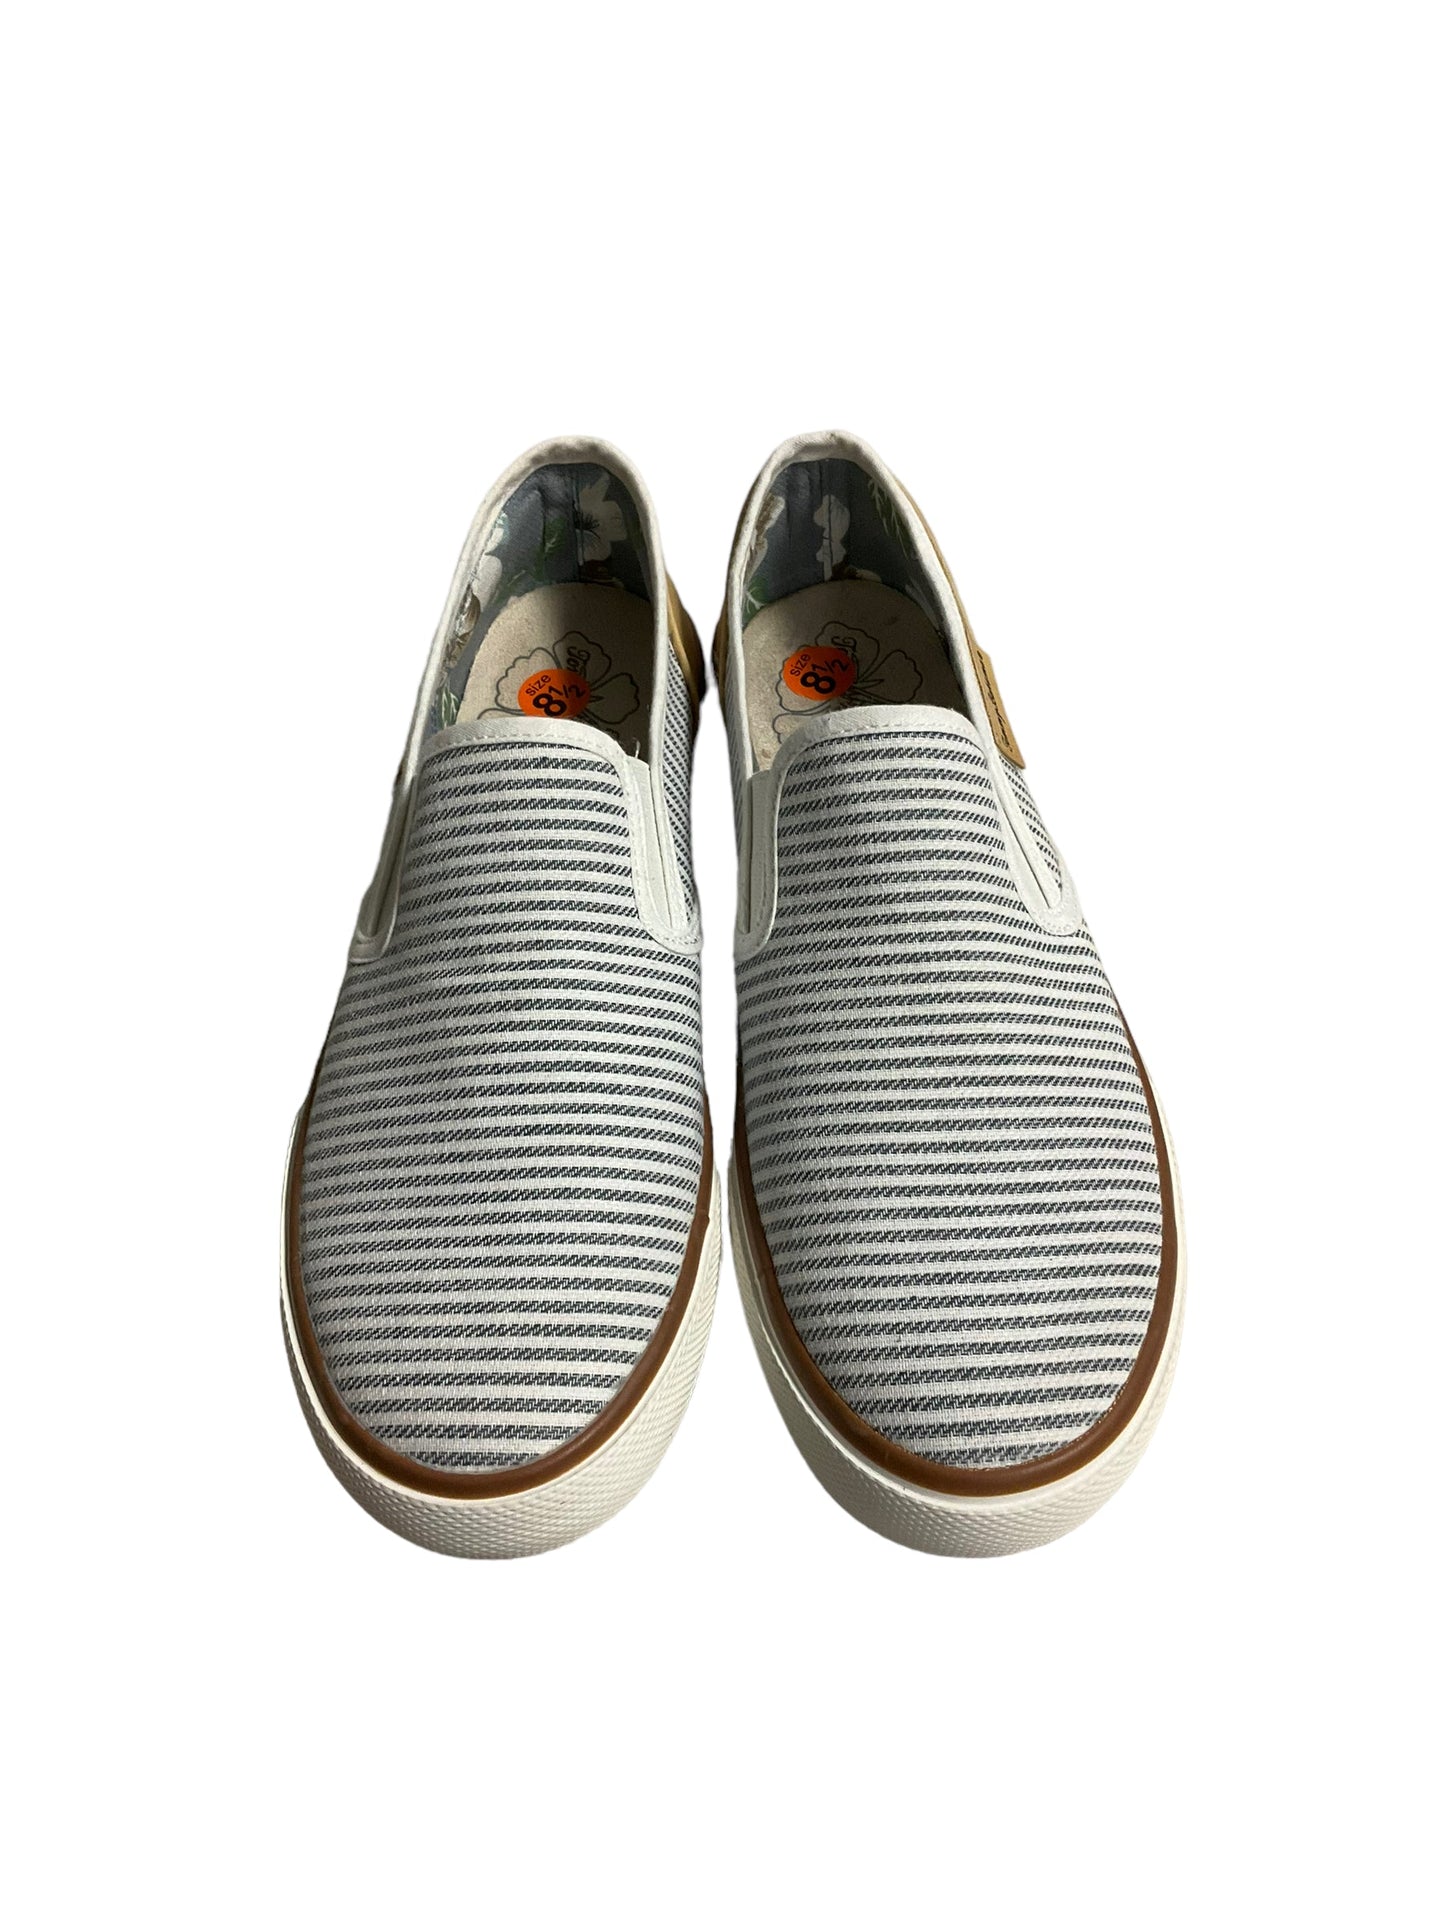 Grey & White Shoes Flats Tommy Bahama, Size 8.5